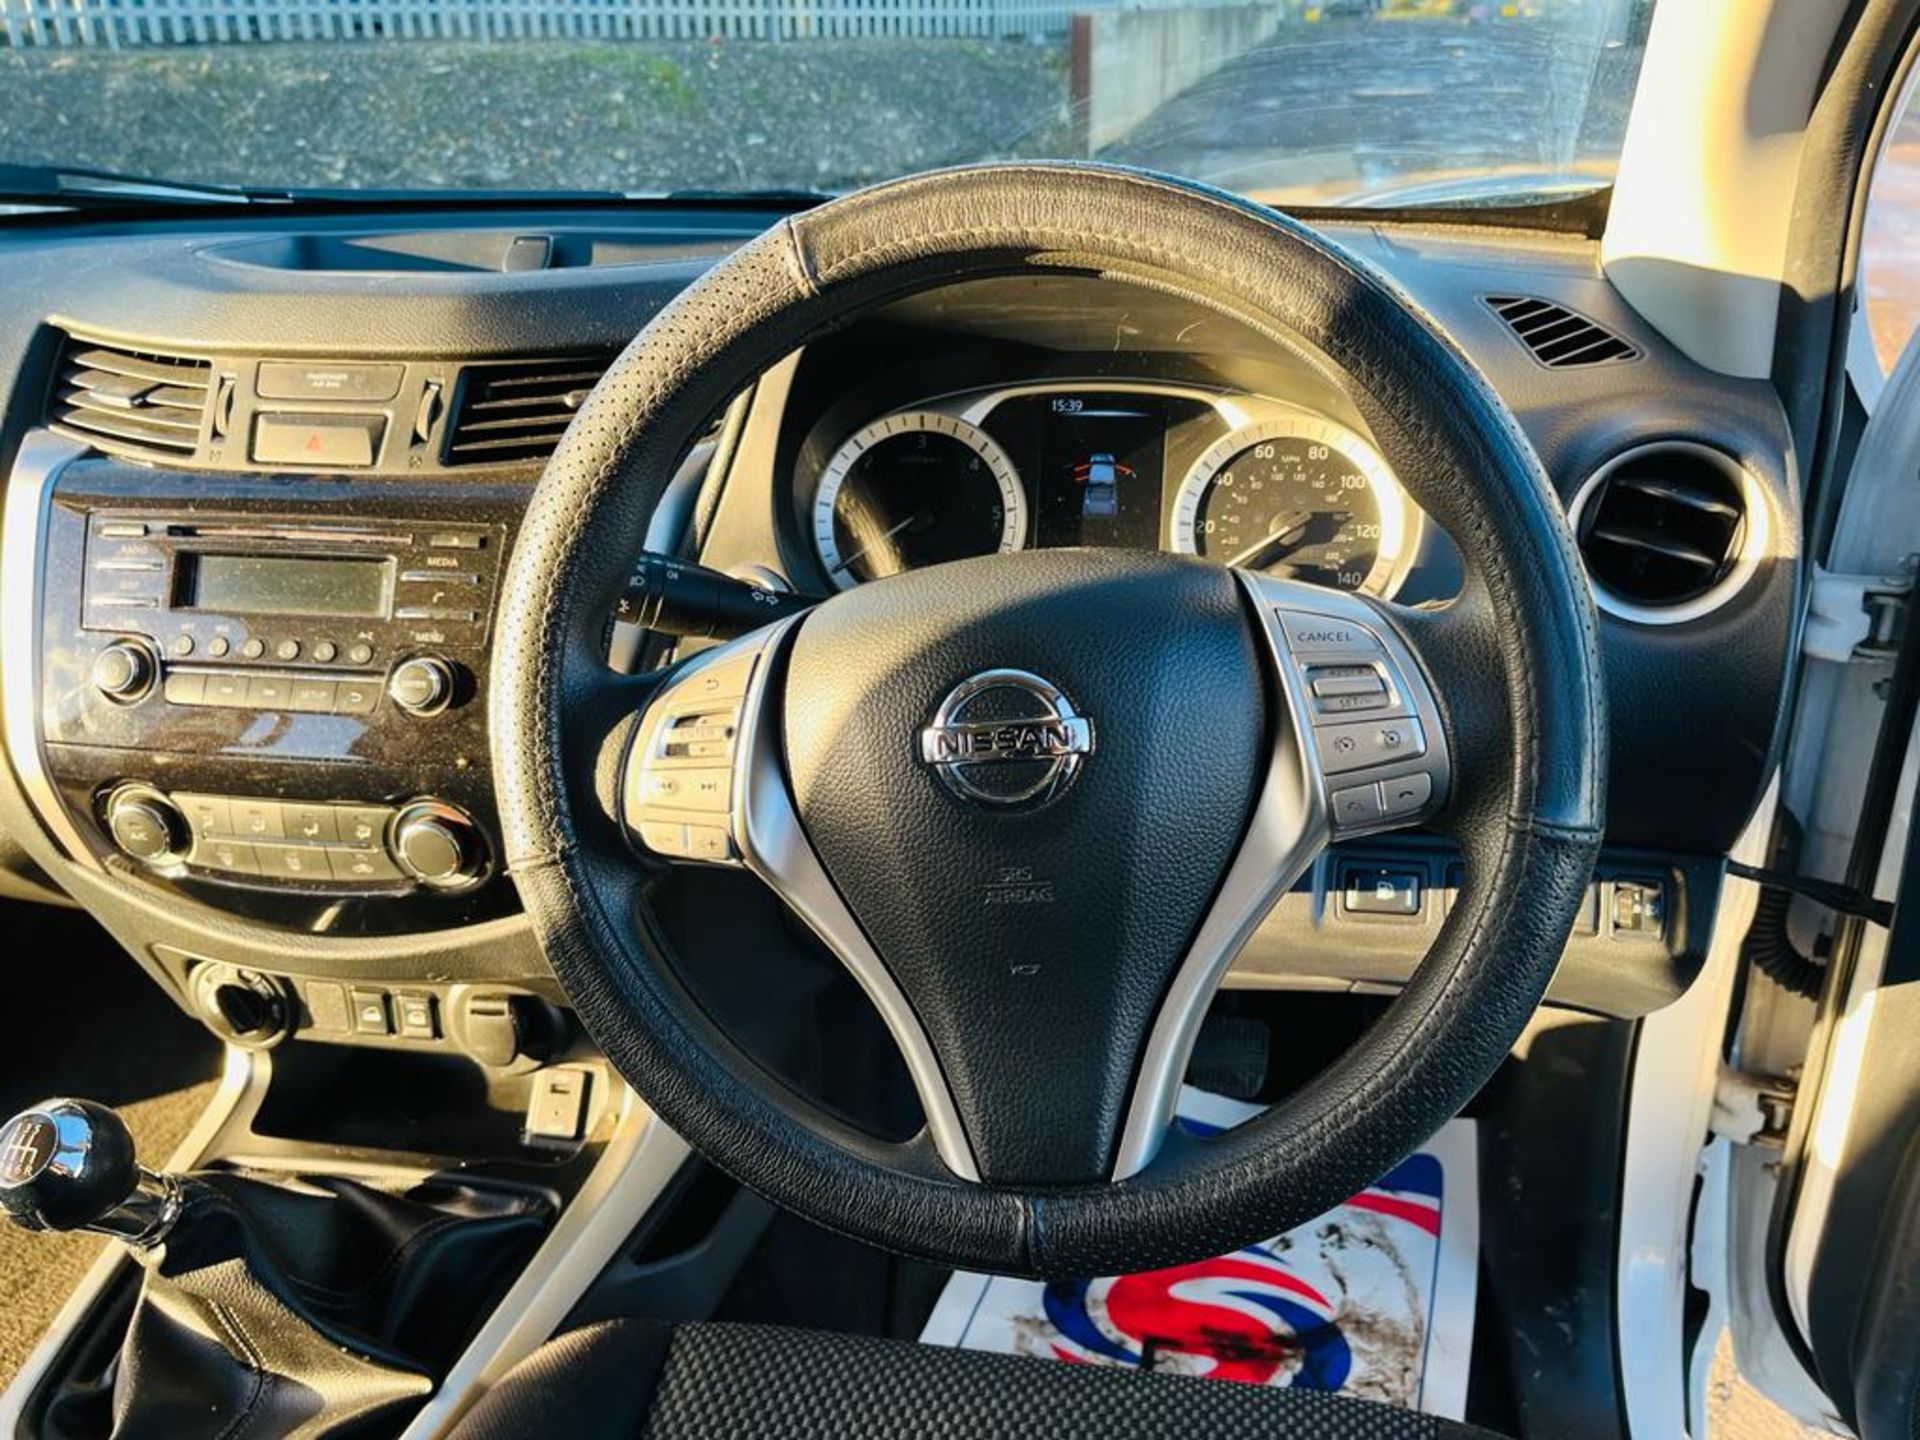 Nissan Navara 2.3 DCI 163 Acenta CrewCab 4WD Pickup 2019 '19 Reg' ULEZ Compliant - Image 16 of 33